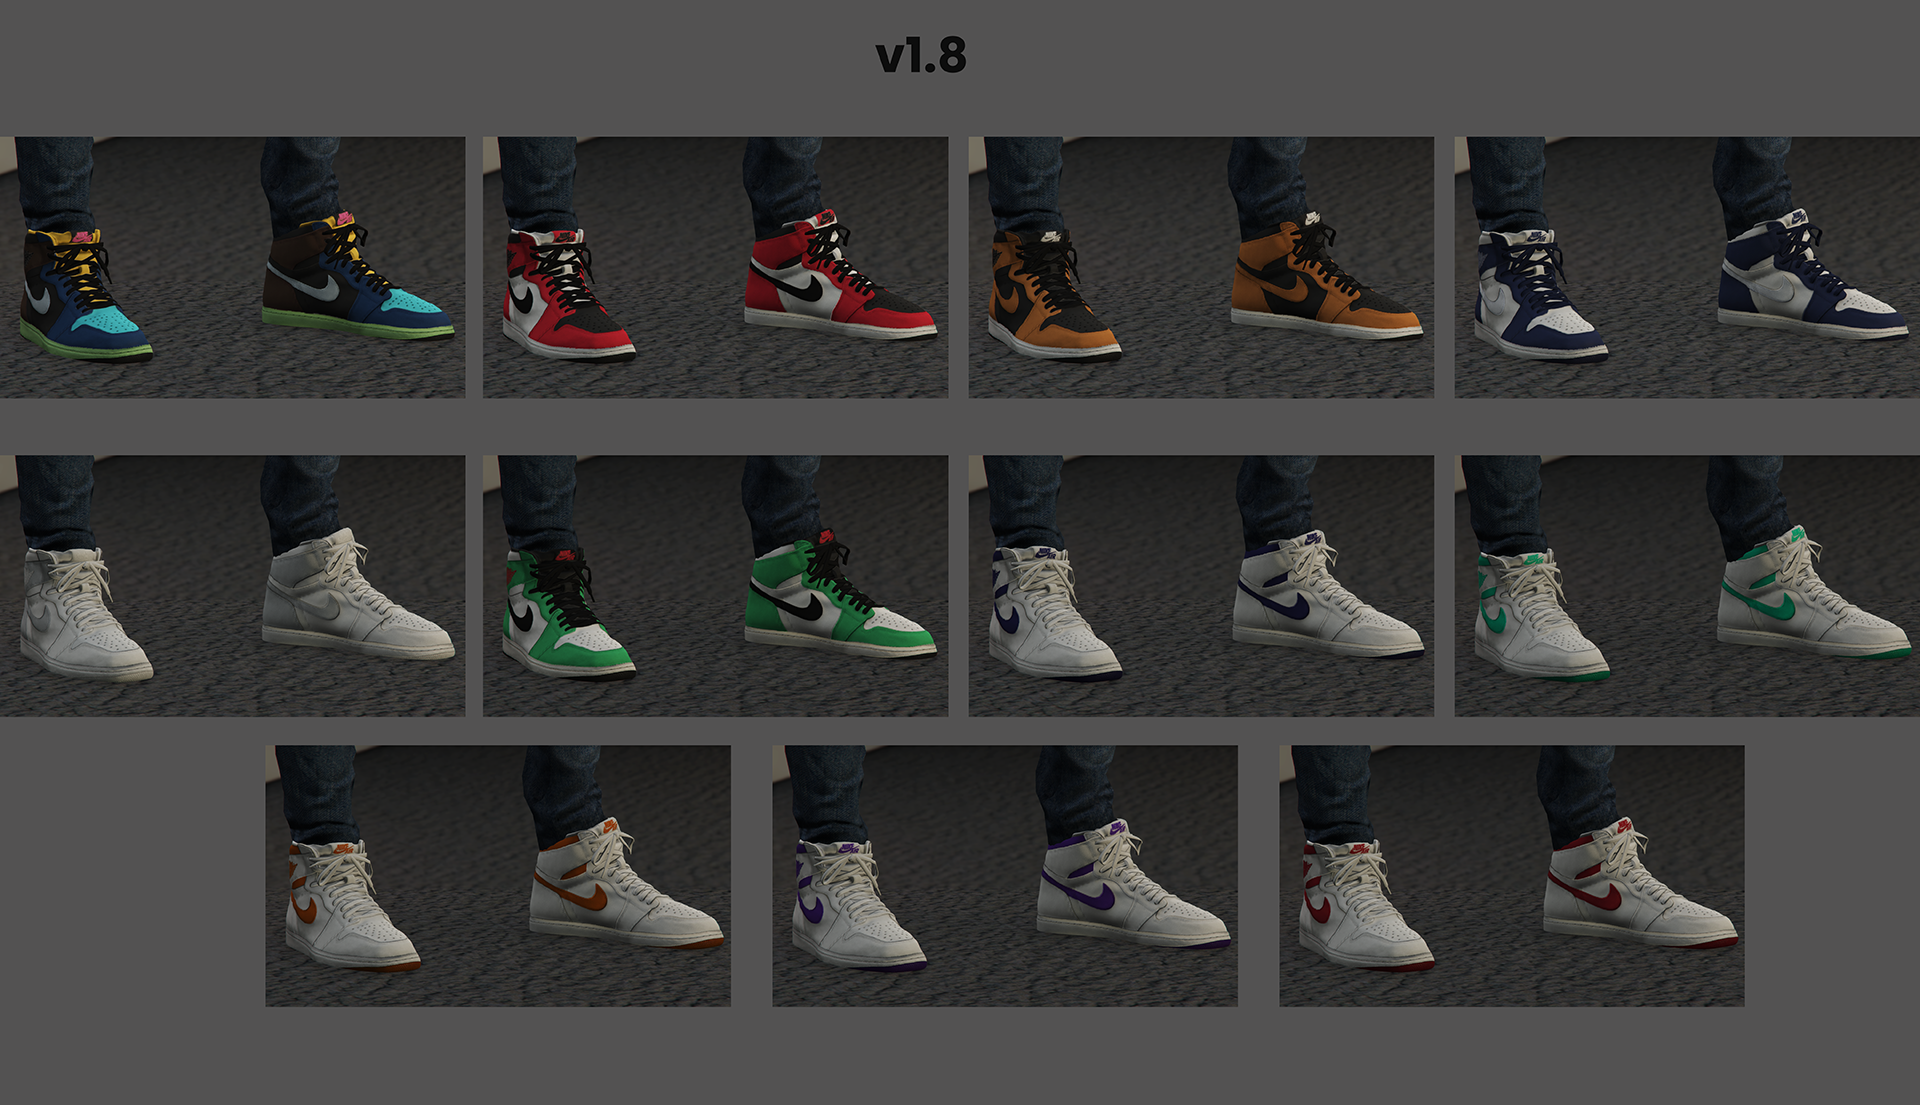 Louis Vuitton x Air Jordan 1 Customs – GTA 5 mod